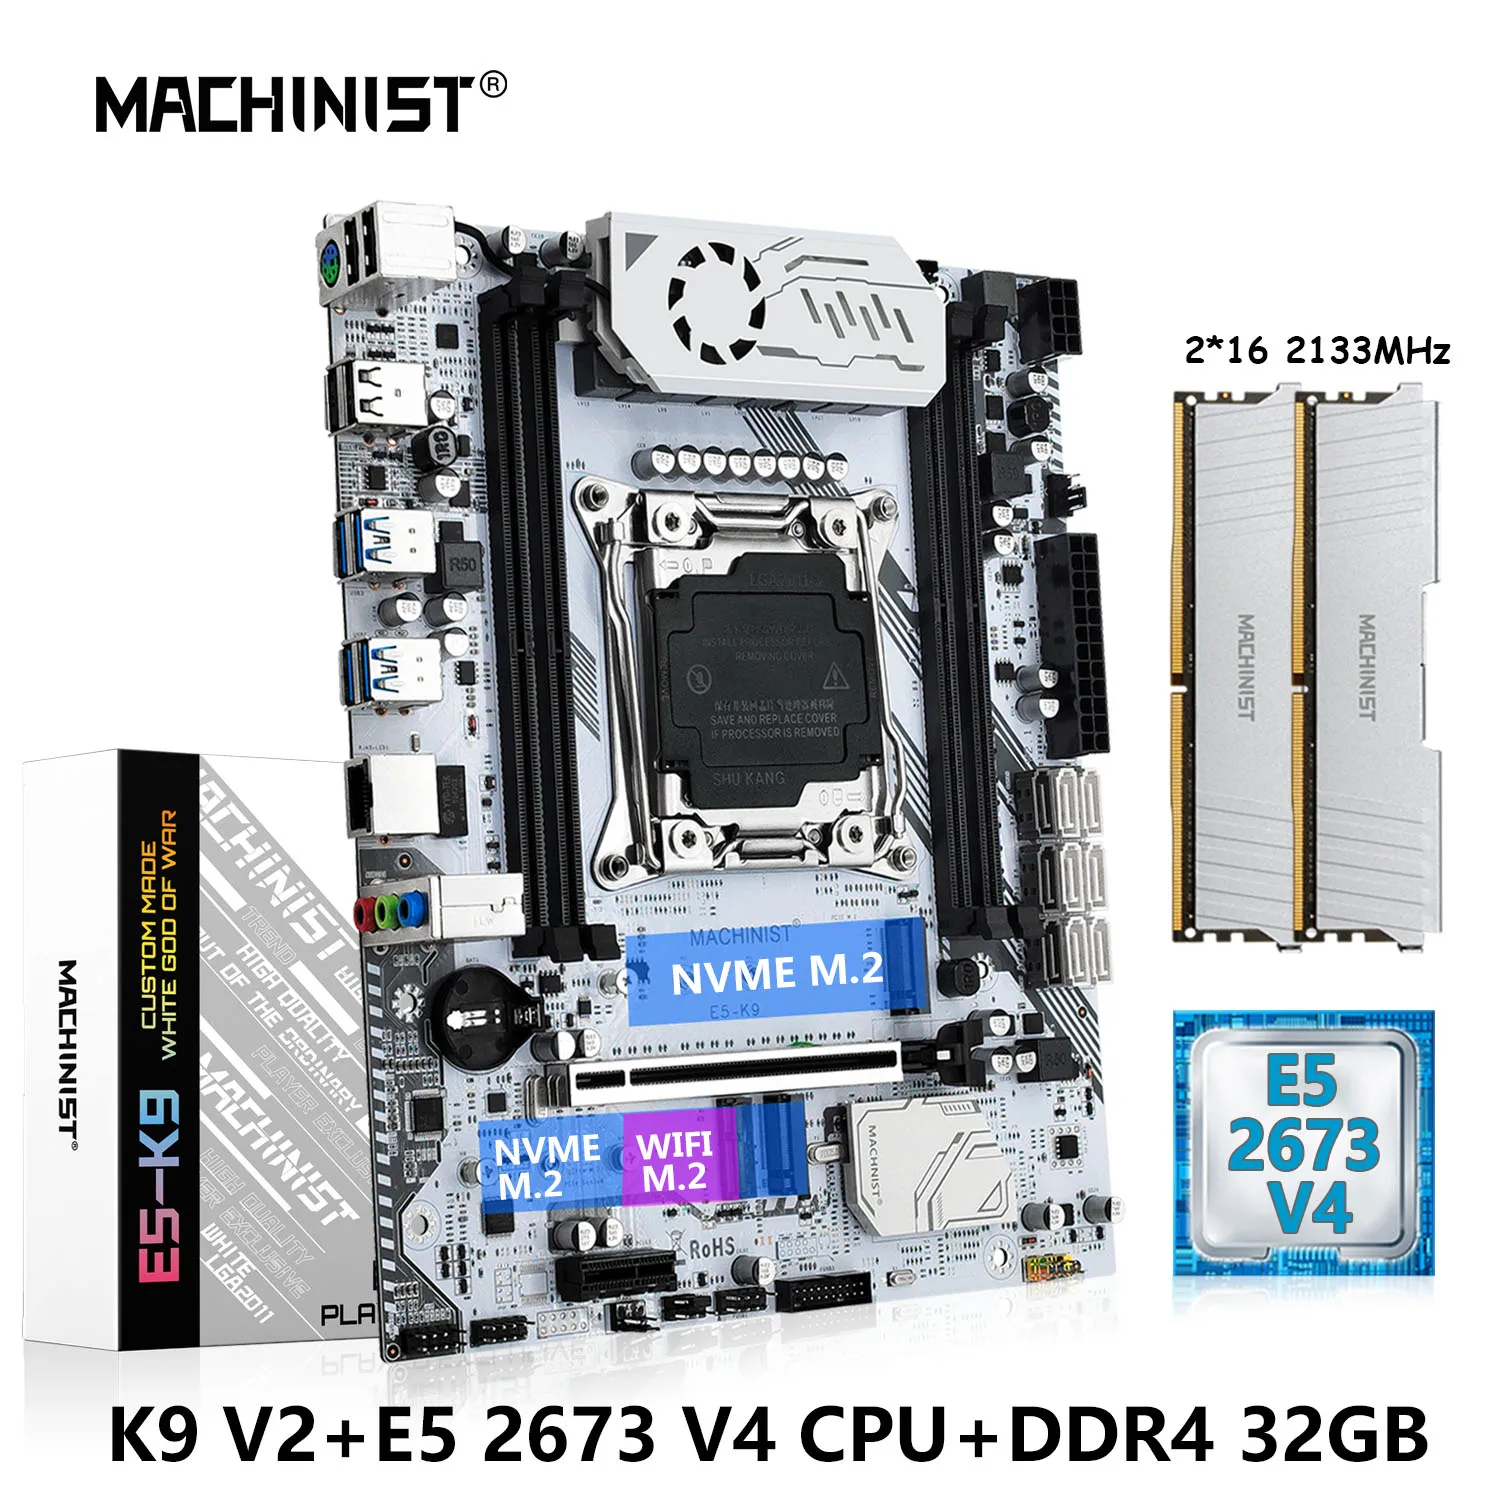 

MACHINIST K9 X99 Motherboard Combo LGA 2011-3 E5 2673 V4 kit Xeon CPU DDR4 32GB RAM 2133MHz Memory NVME M.2 USB 3.0 Four Channel